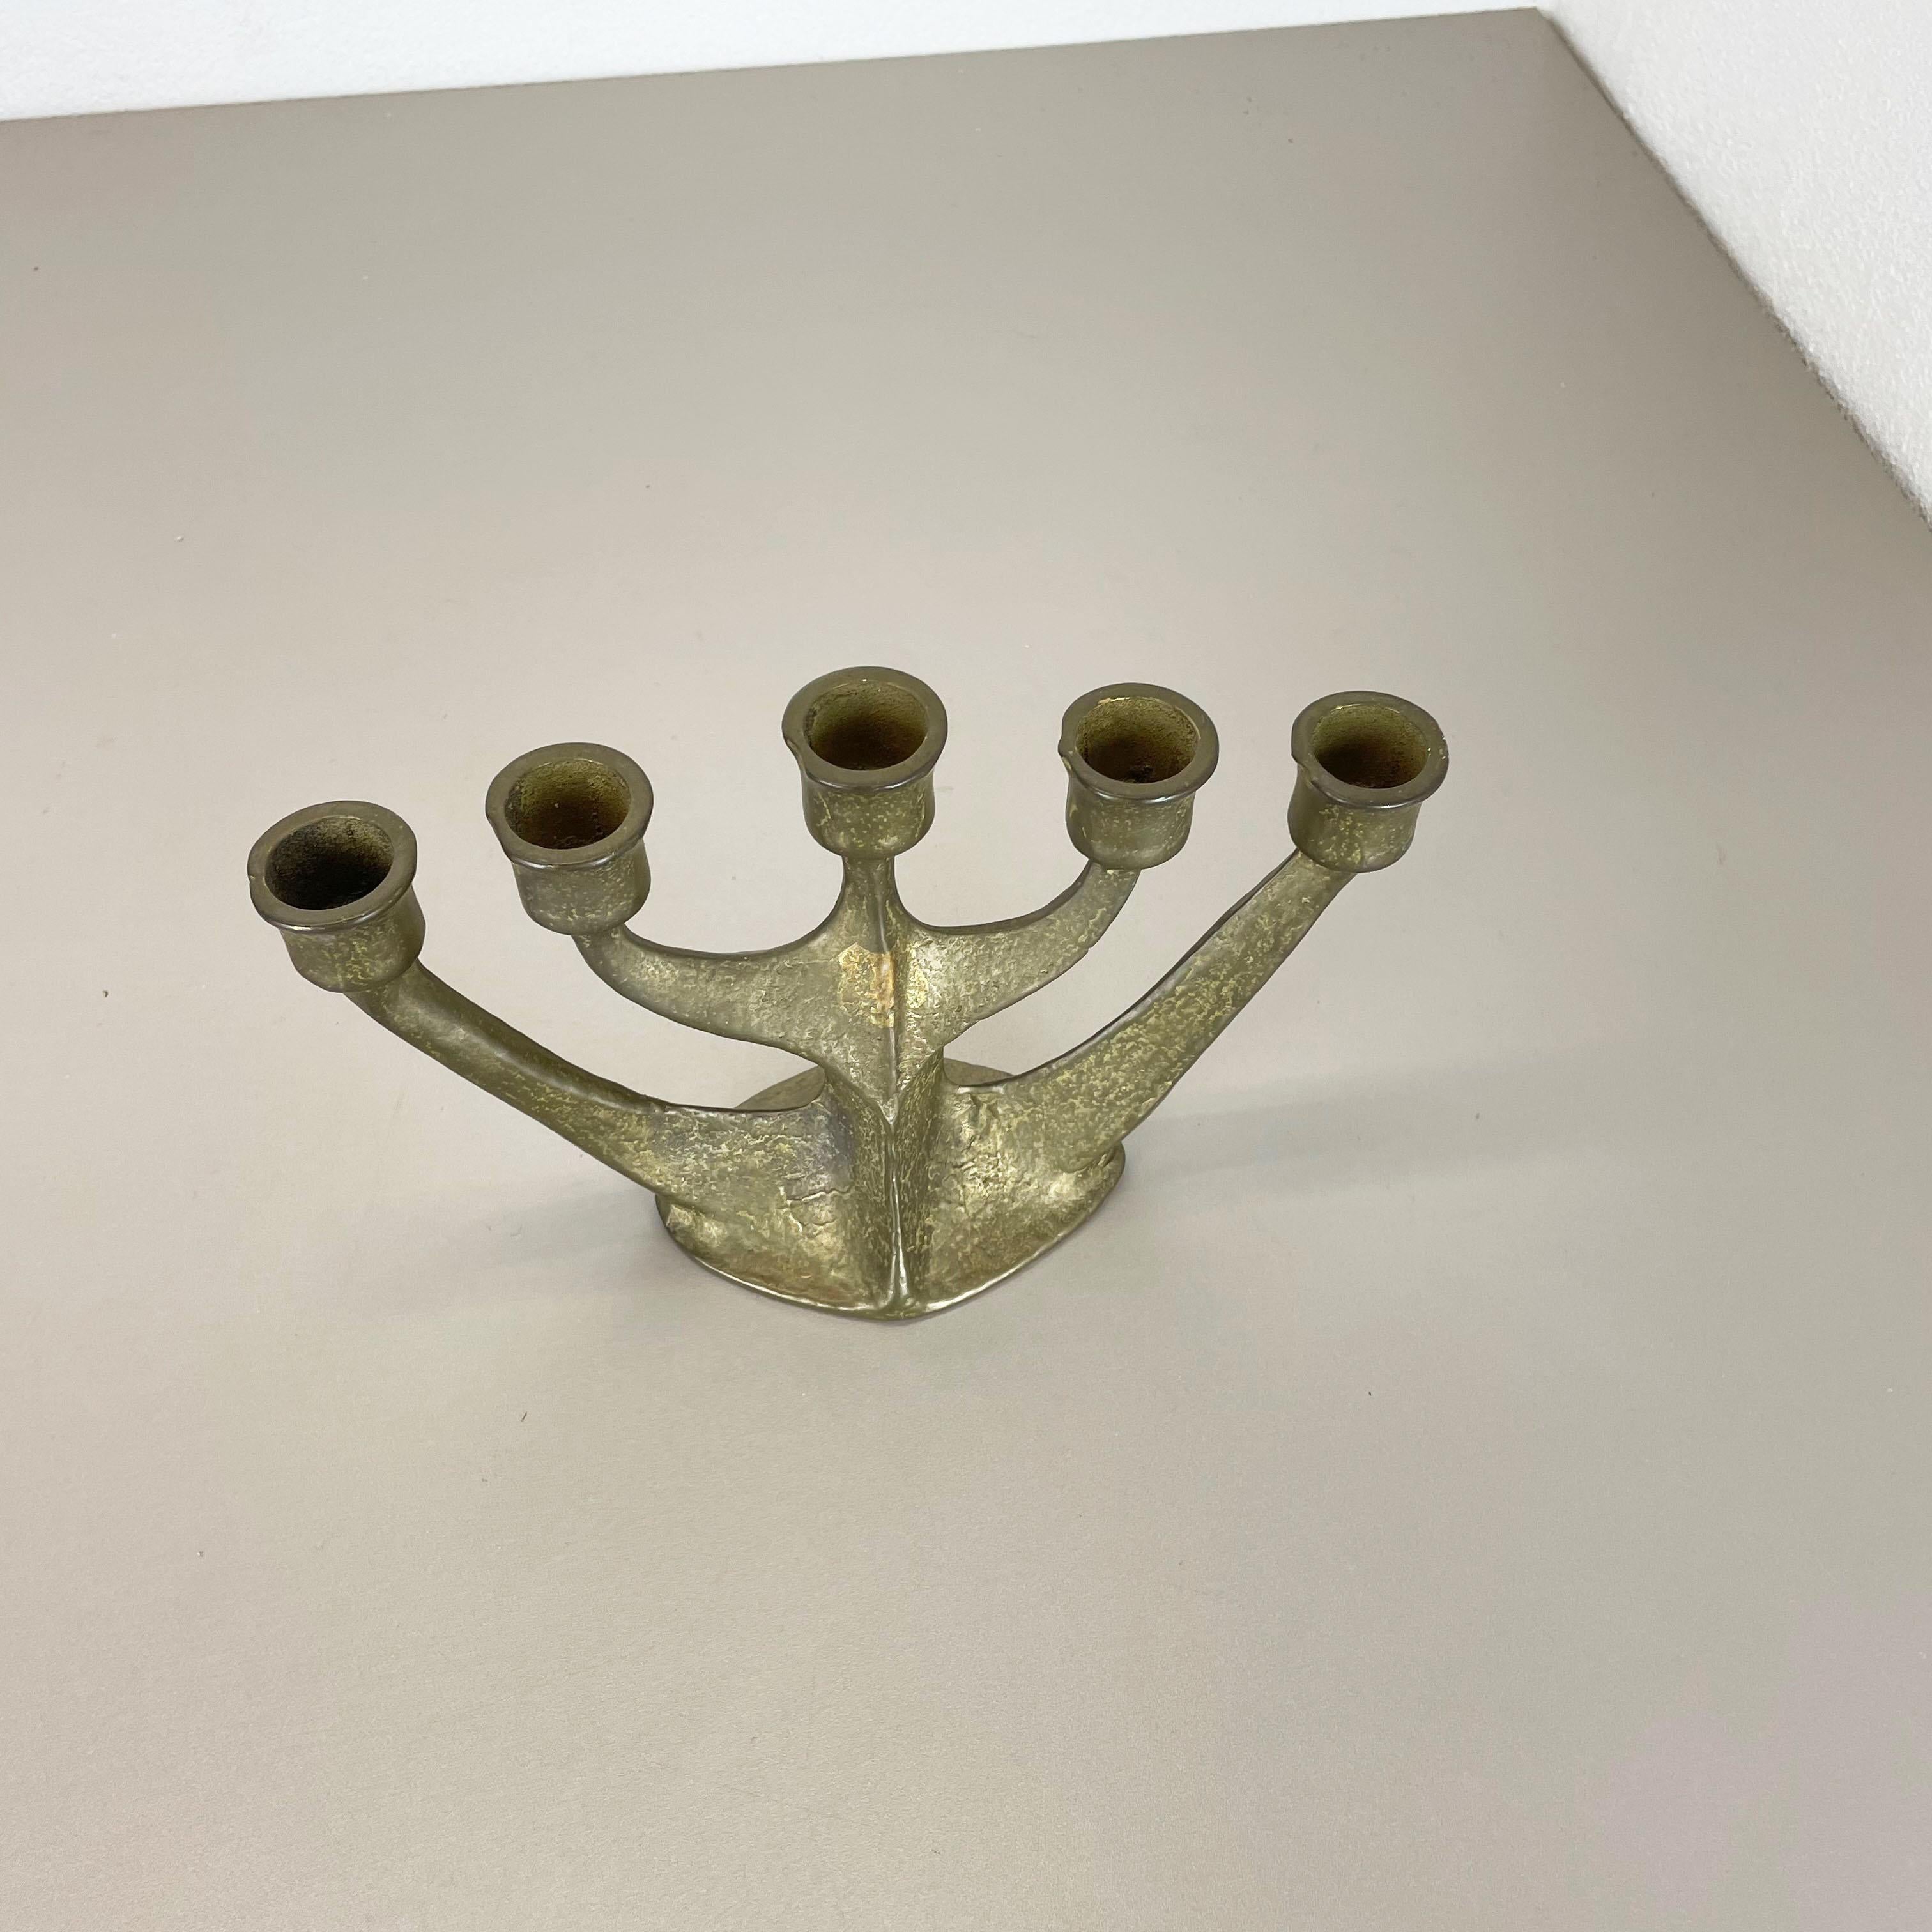 Modernist Sculptural Brutalist Brass Candleholder, Germany, 1970s In Good Condition For Sale In Kirchlengern, DE